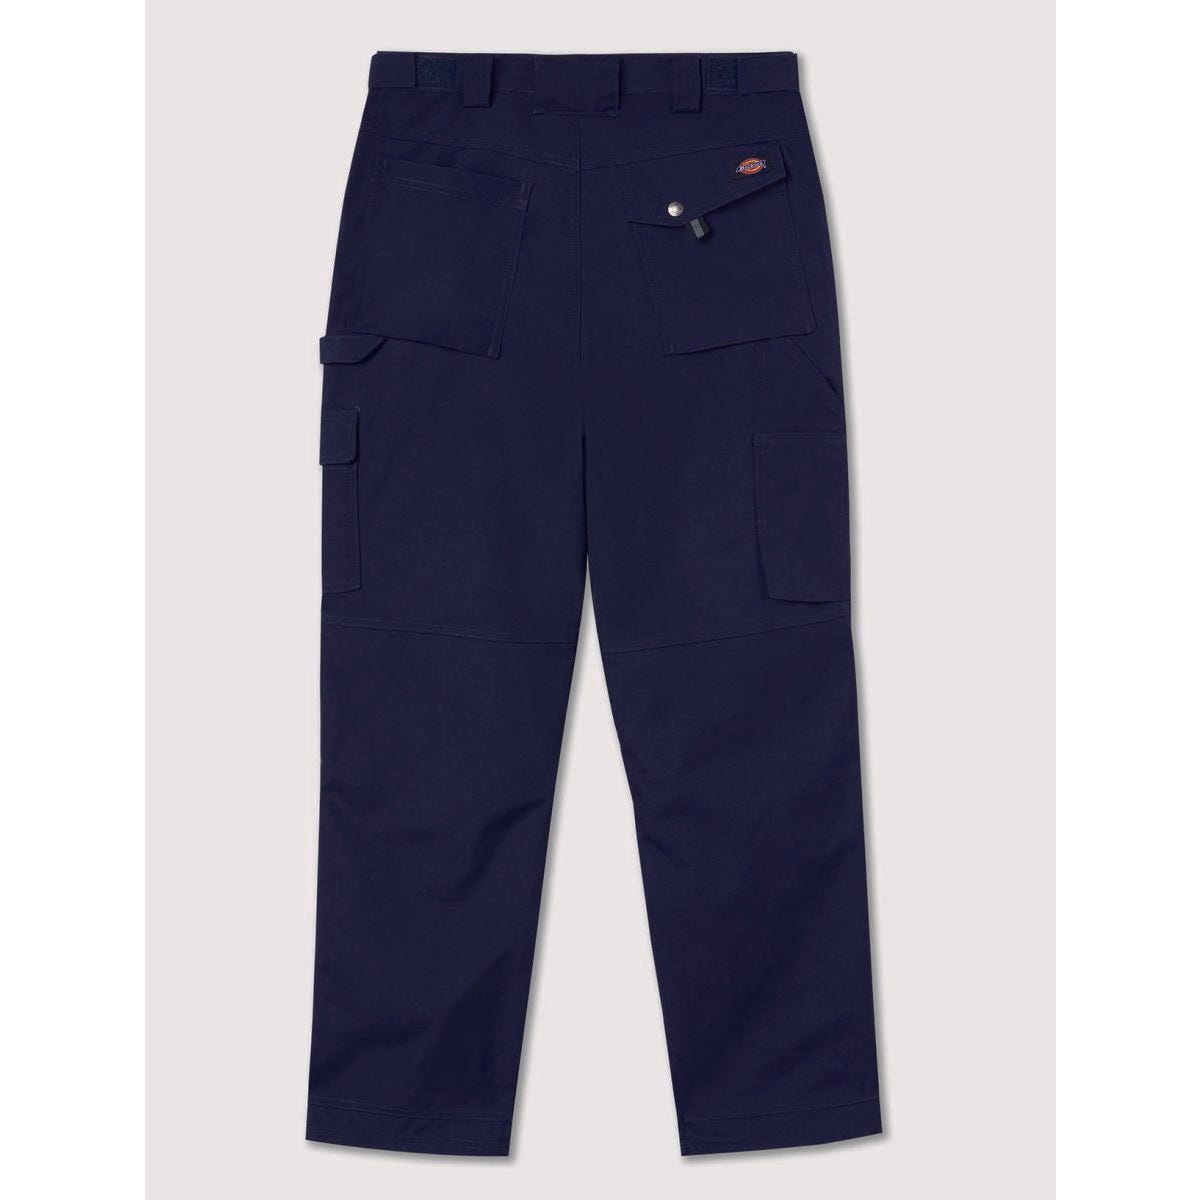 Pantalon Eisenhower multi-poches Noir - Dickies - Taille 46 7